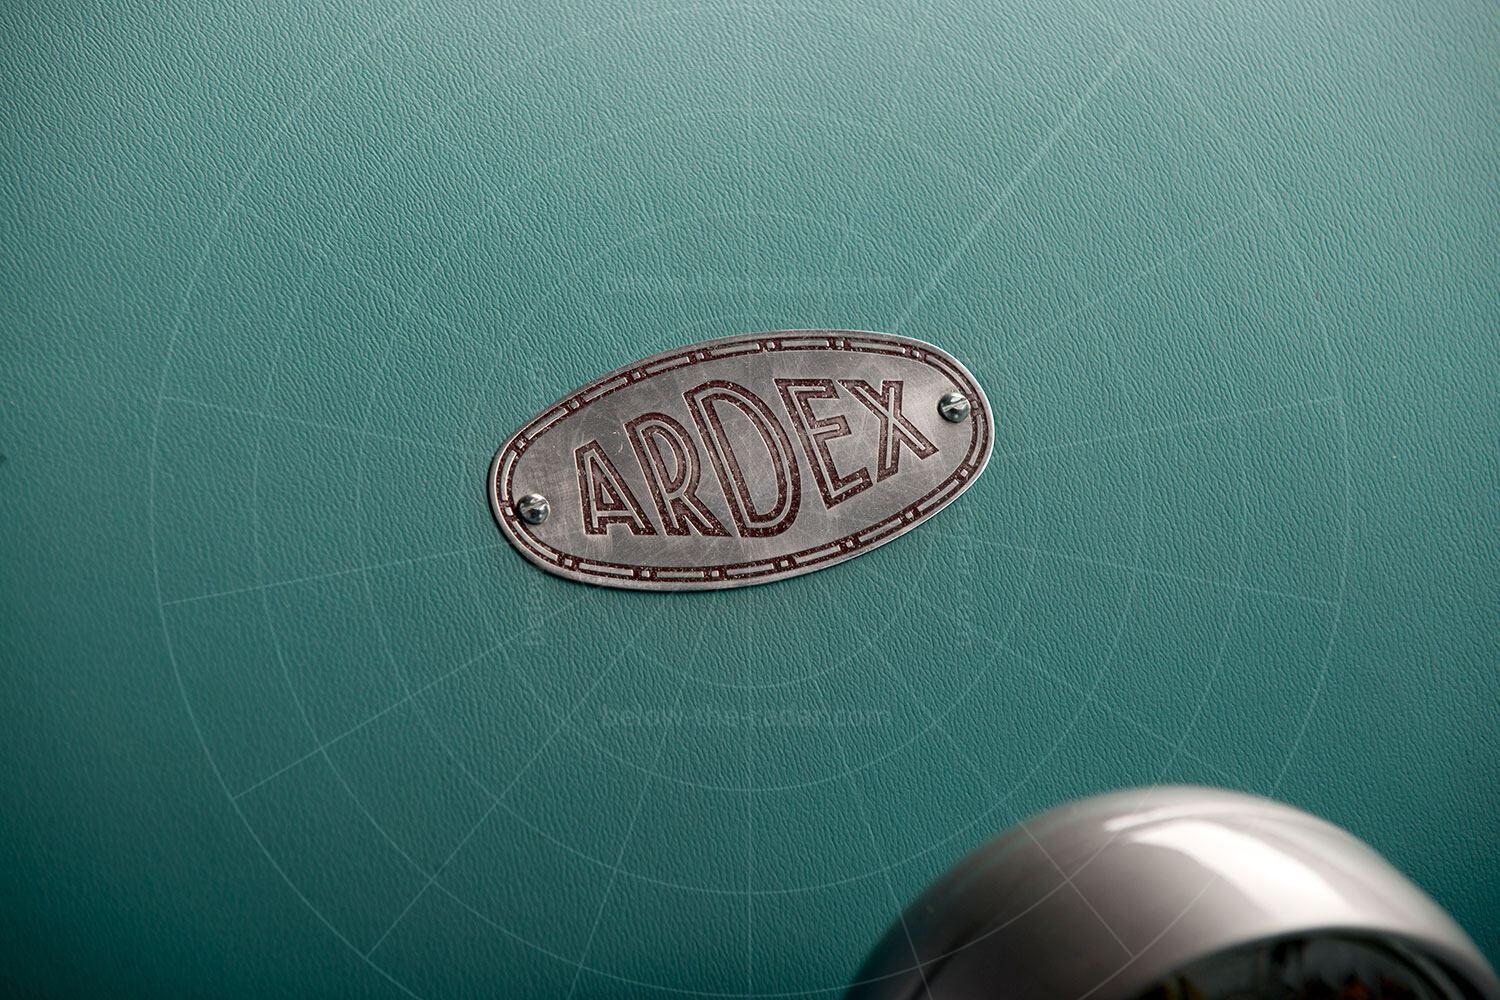 Ardex cycle car badge Pic: RM Sotheby's | Ardex cycle car badge